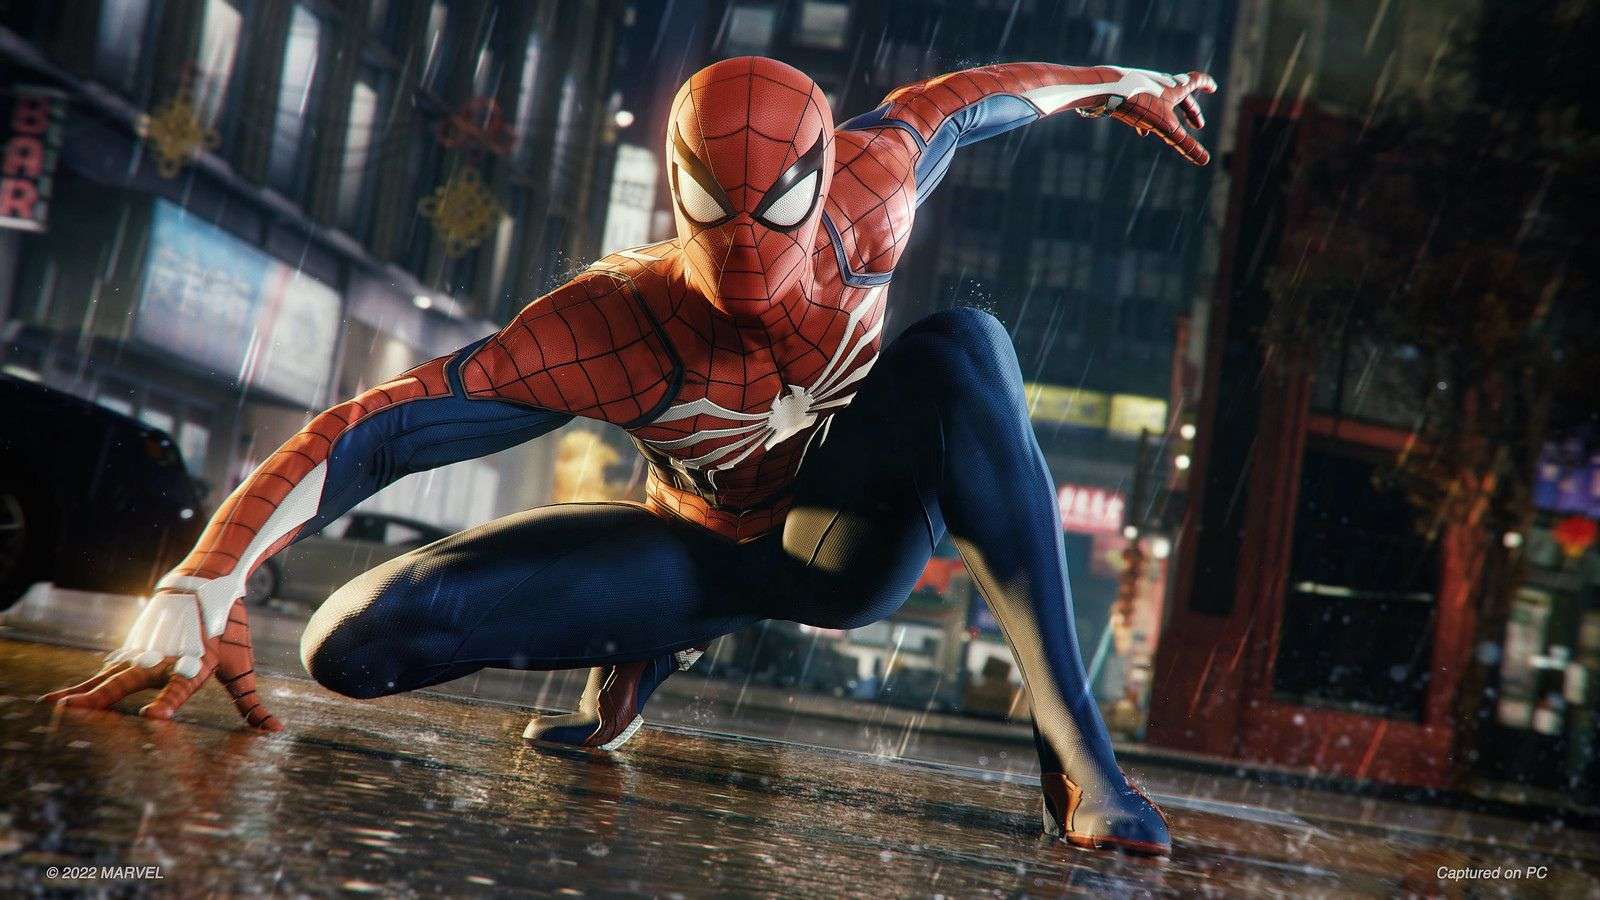 marvels spiderman crouching in rain pc header image